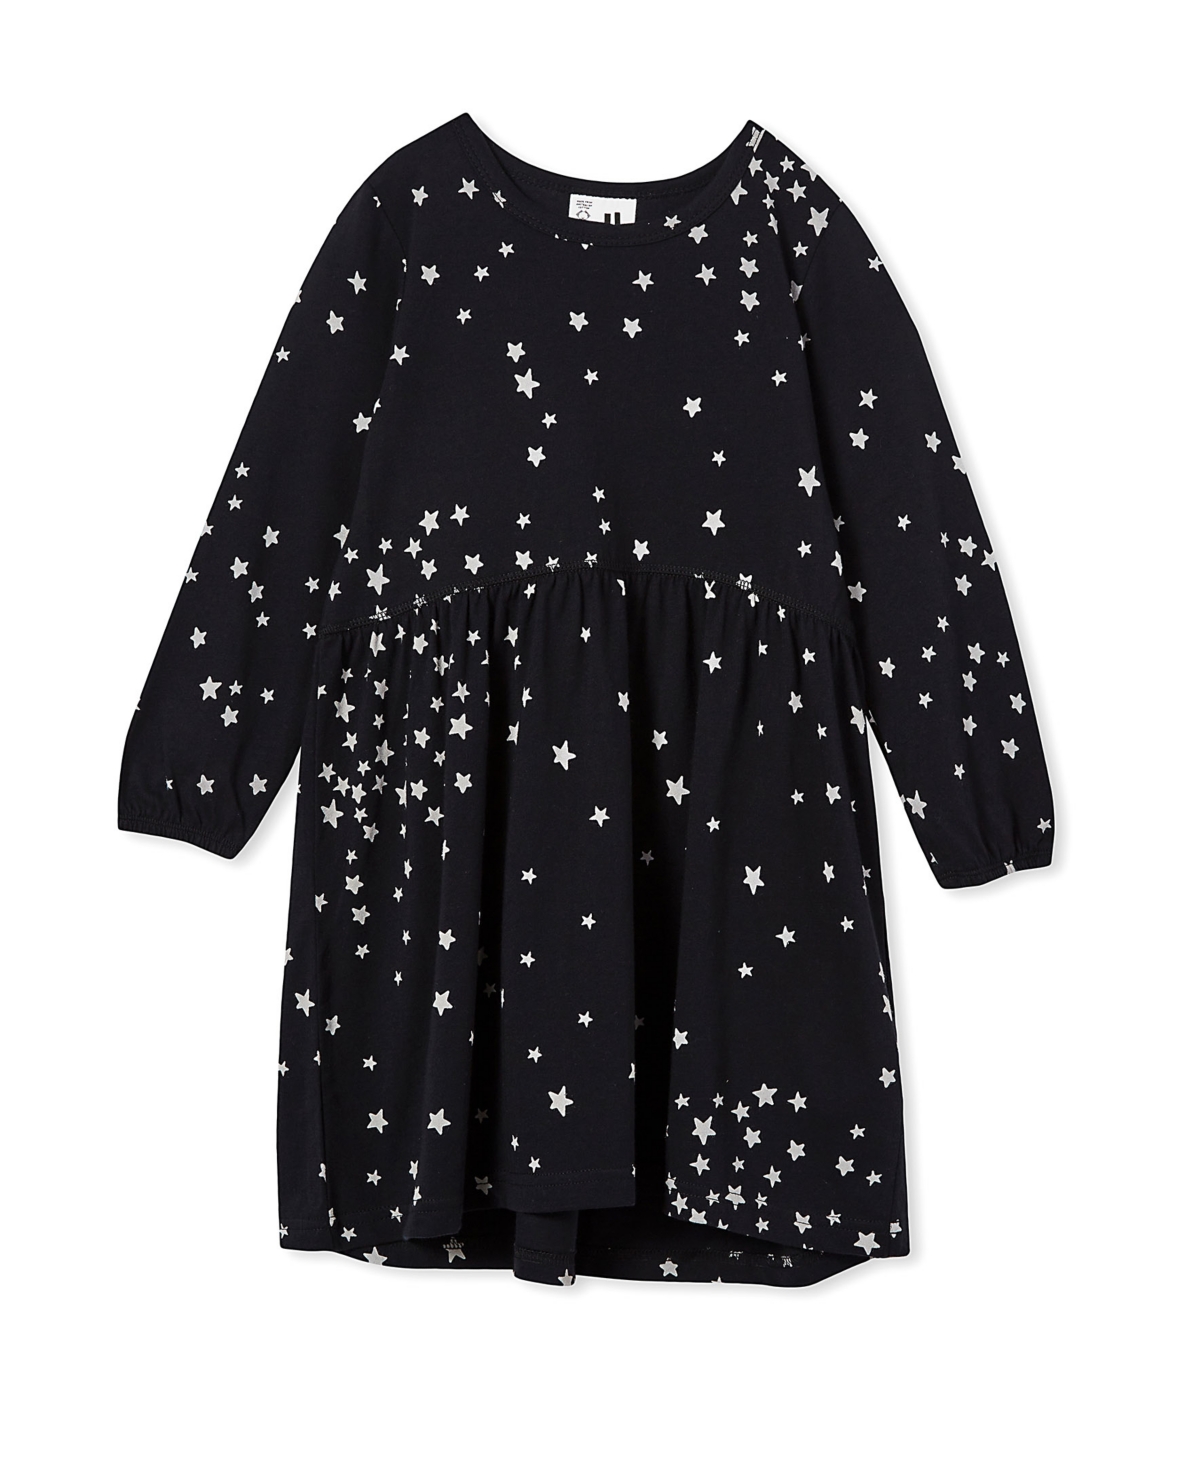 Cotton On Toddler Girls Savannah Long Sleeve Dress In Black/scattered Stars